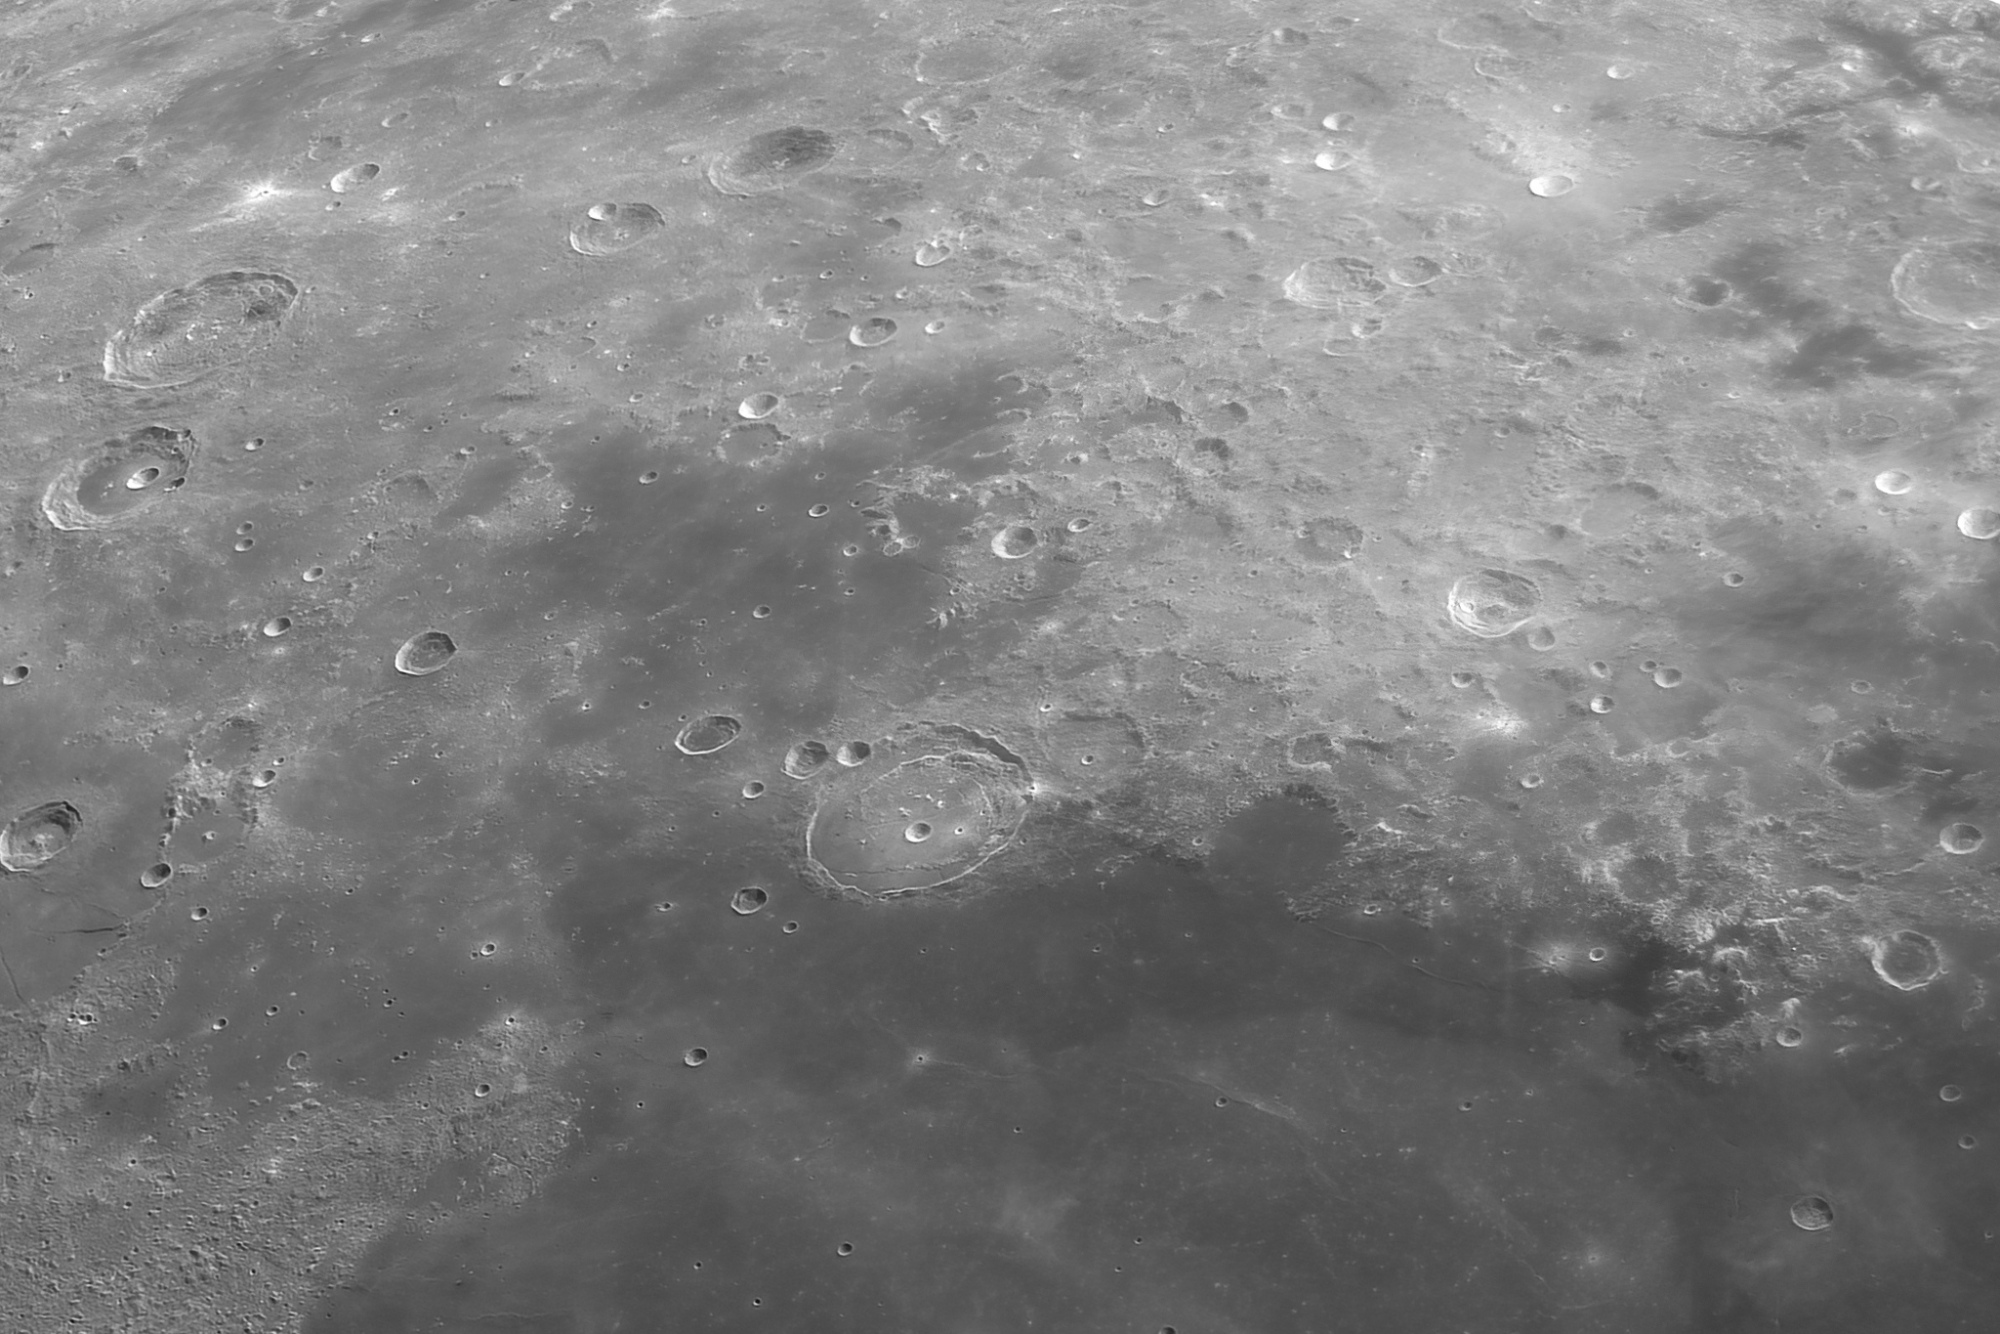 Moon 03 03 20-2048-crop3.JPG